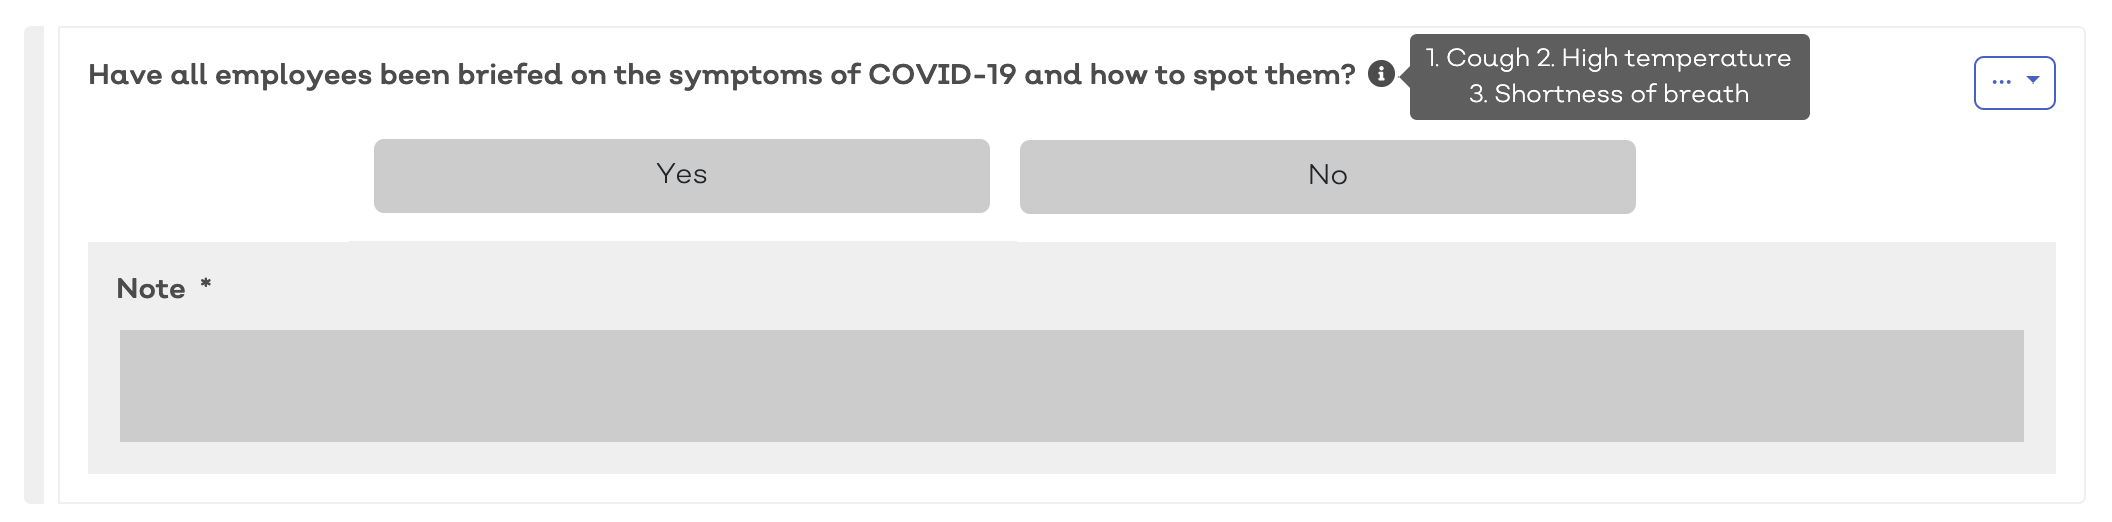 COVID-19 audit question